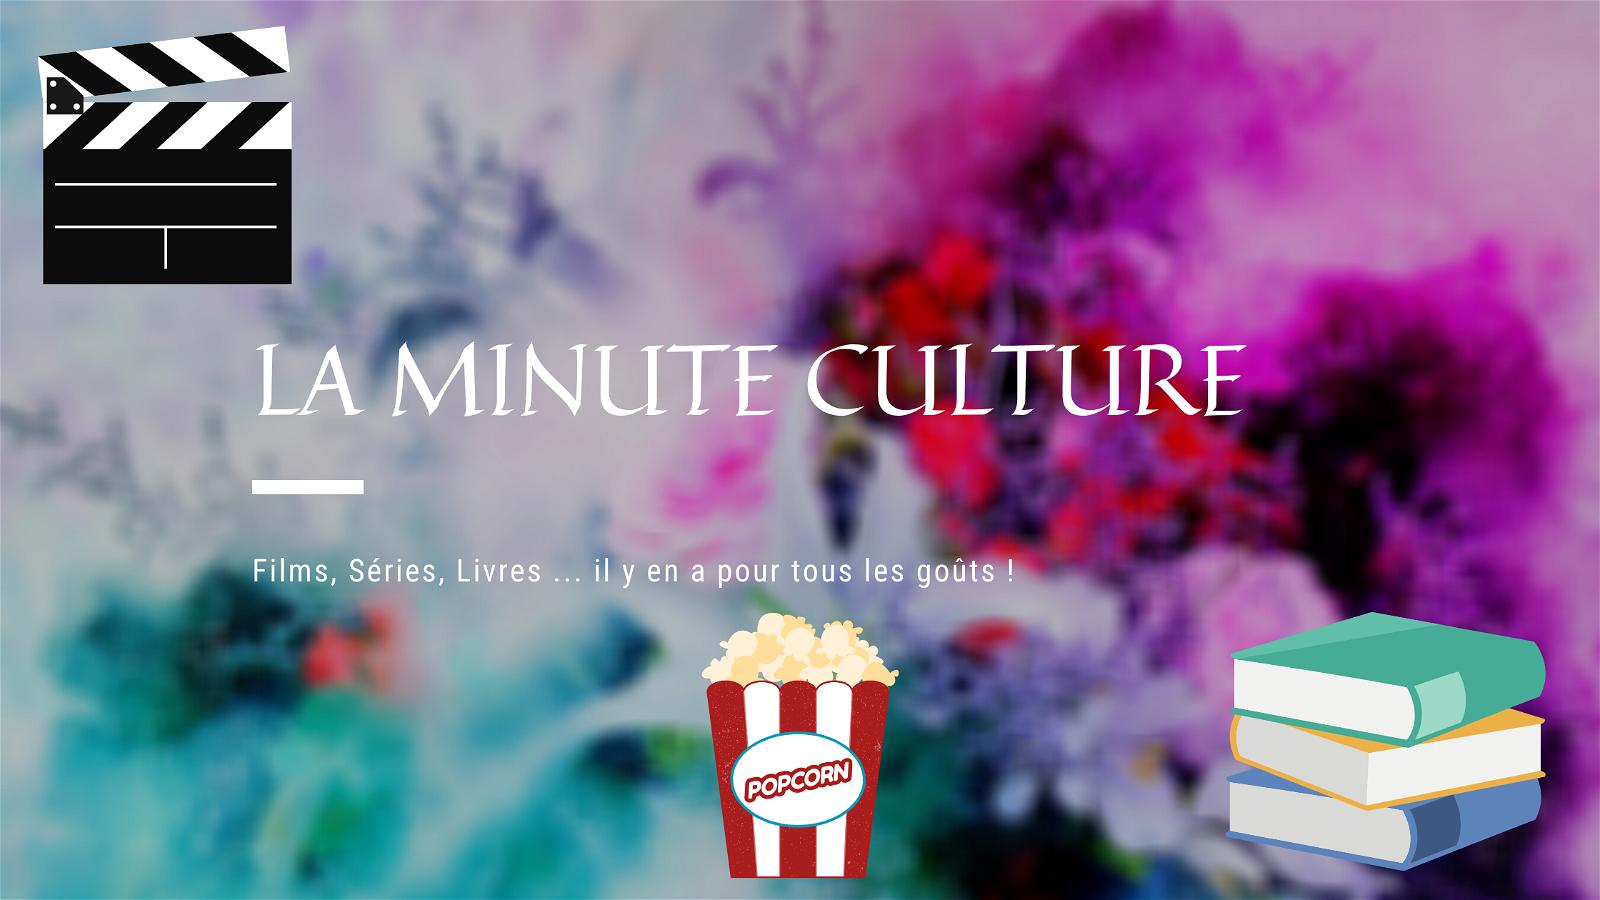 La minute culture - épisode 11